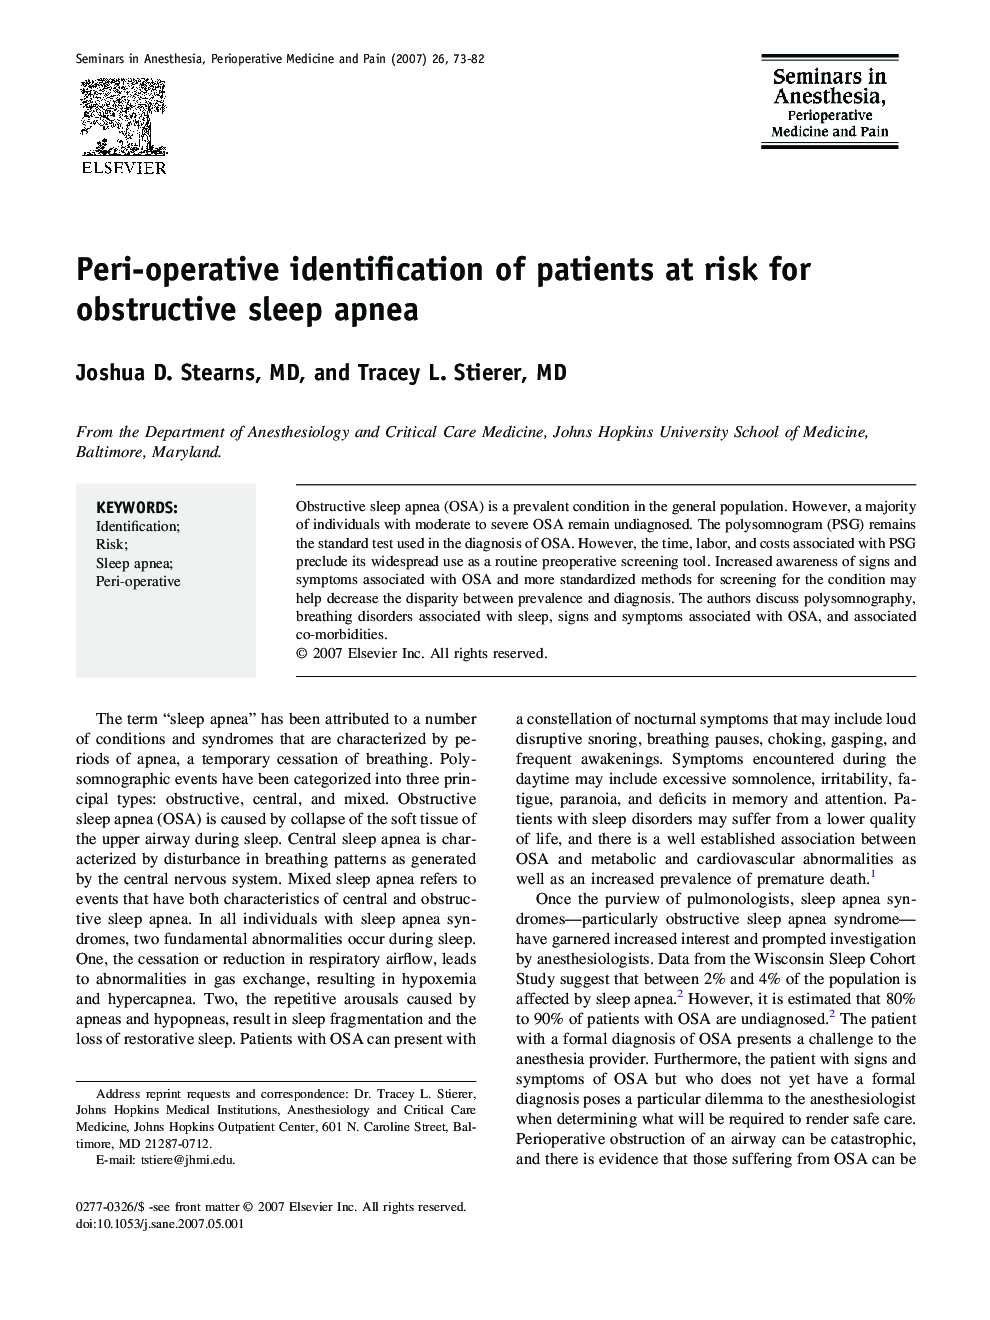 Peri-operative identification of patients at risk for obstructive sleep apnea